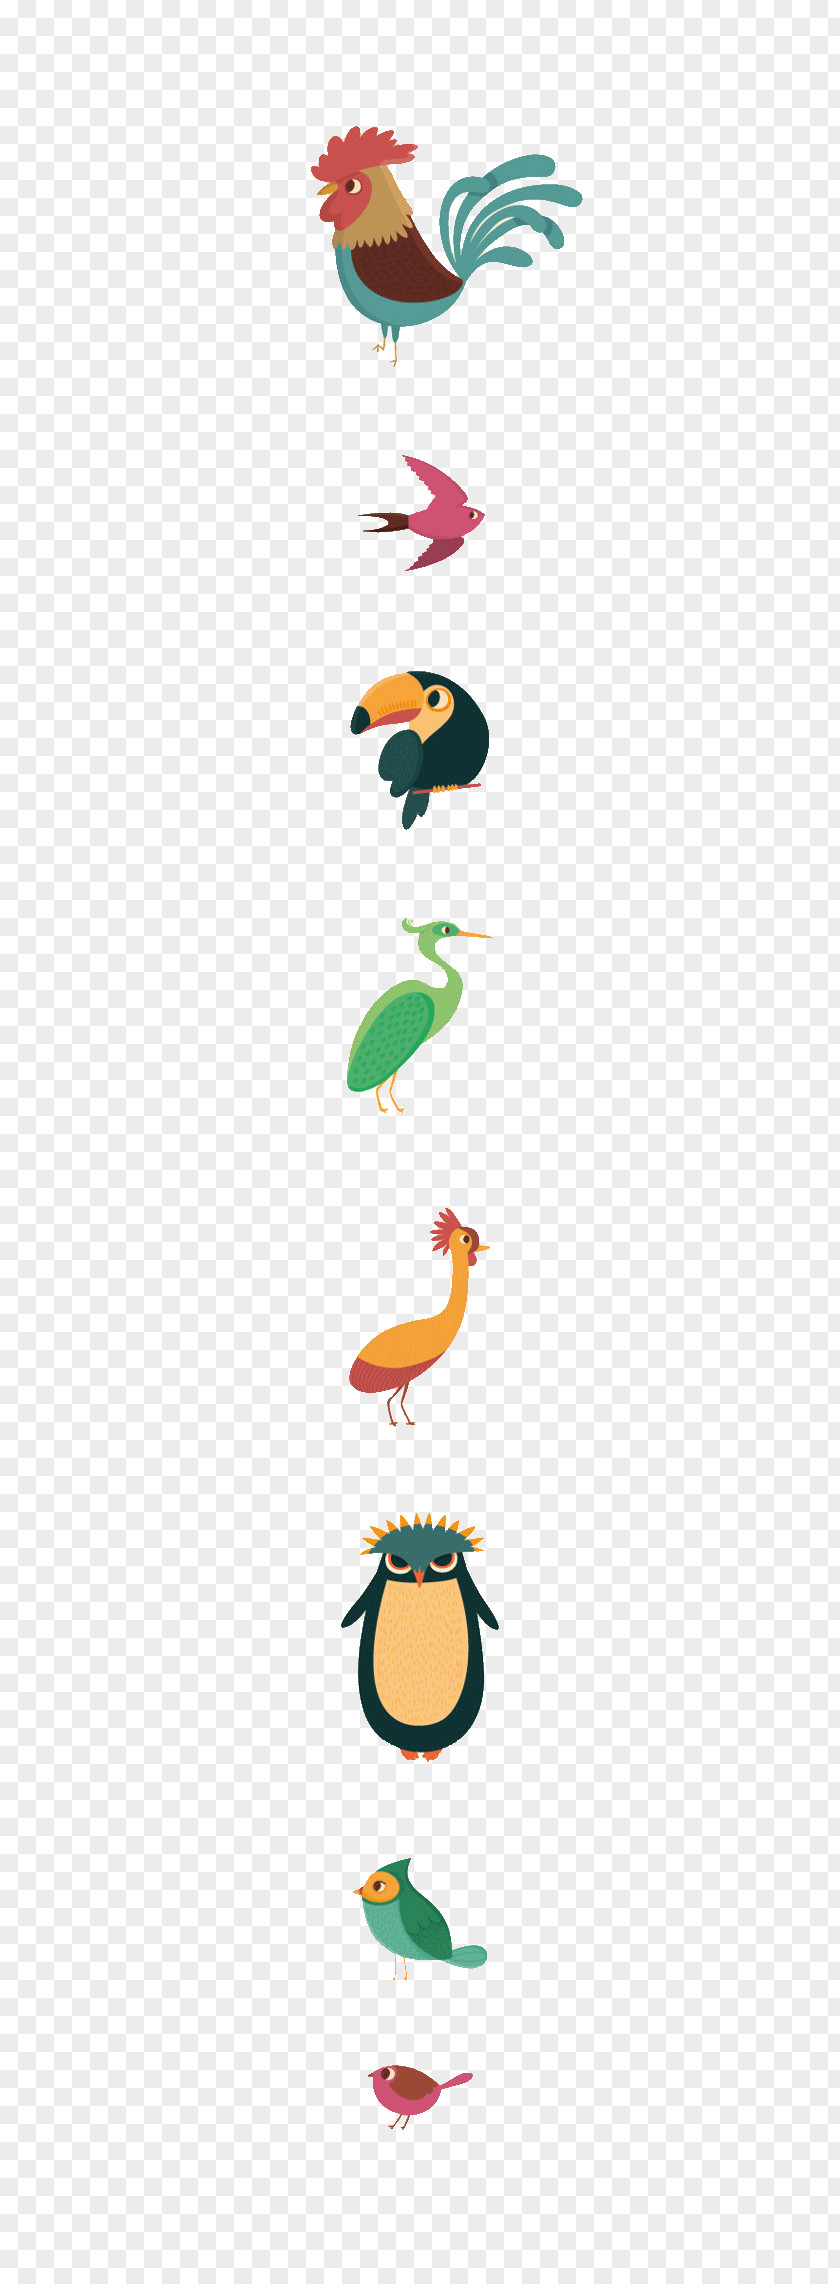 FIG Cute Cartoon Animals Bird Drawing Illustration PNG